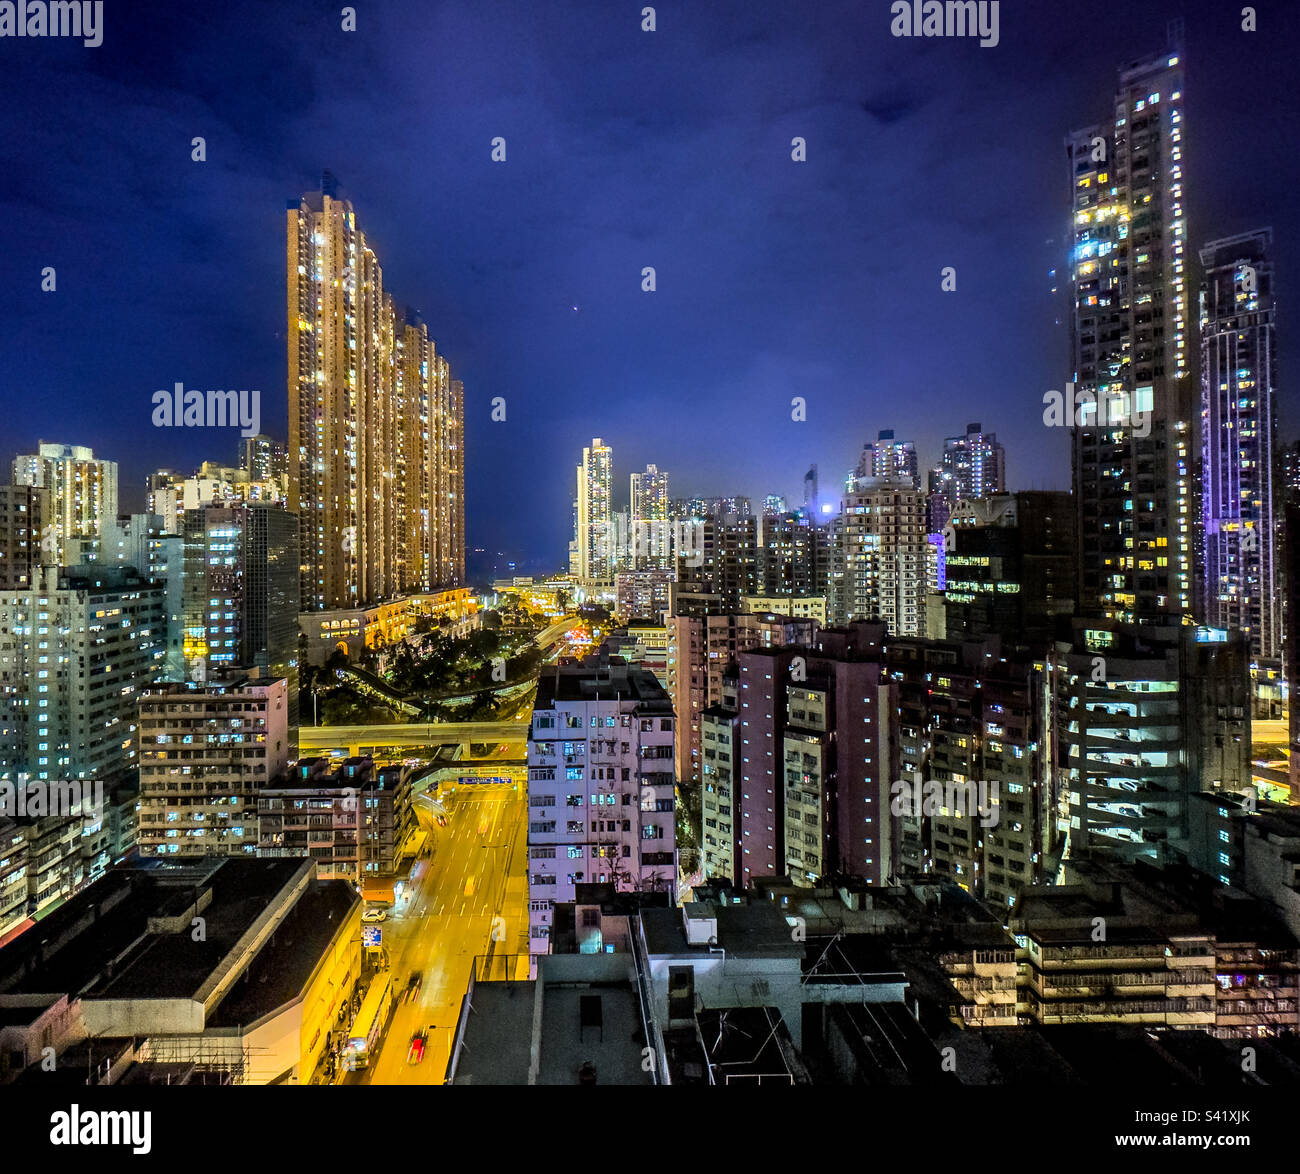 Hong Kong/Kowloon skyline at night from Mong Kok district Stock Photo